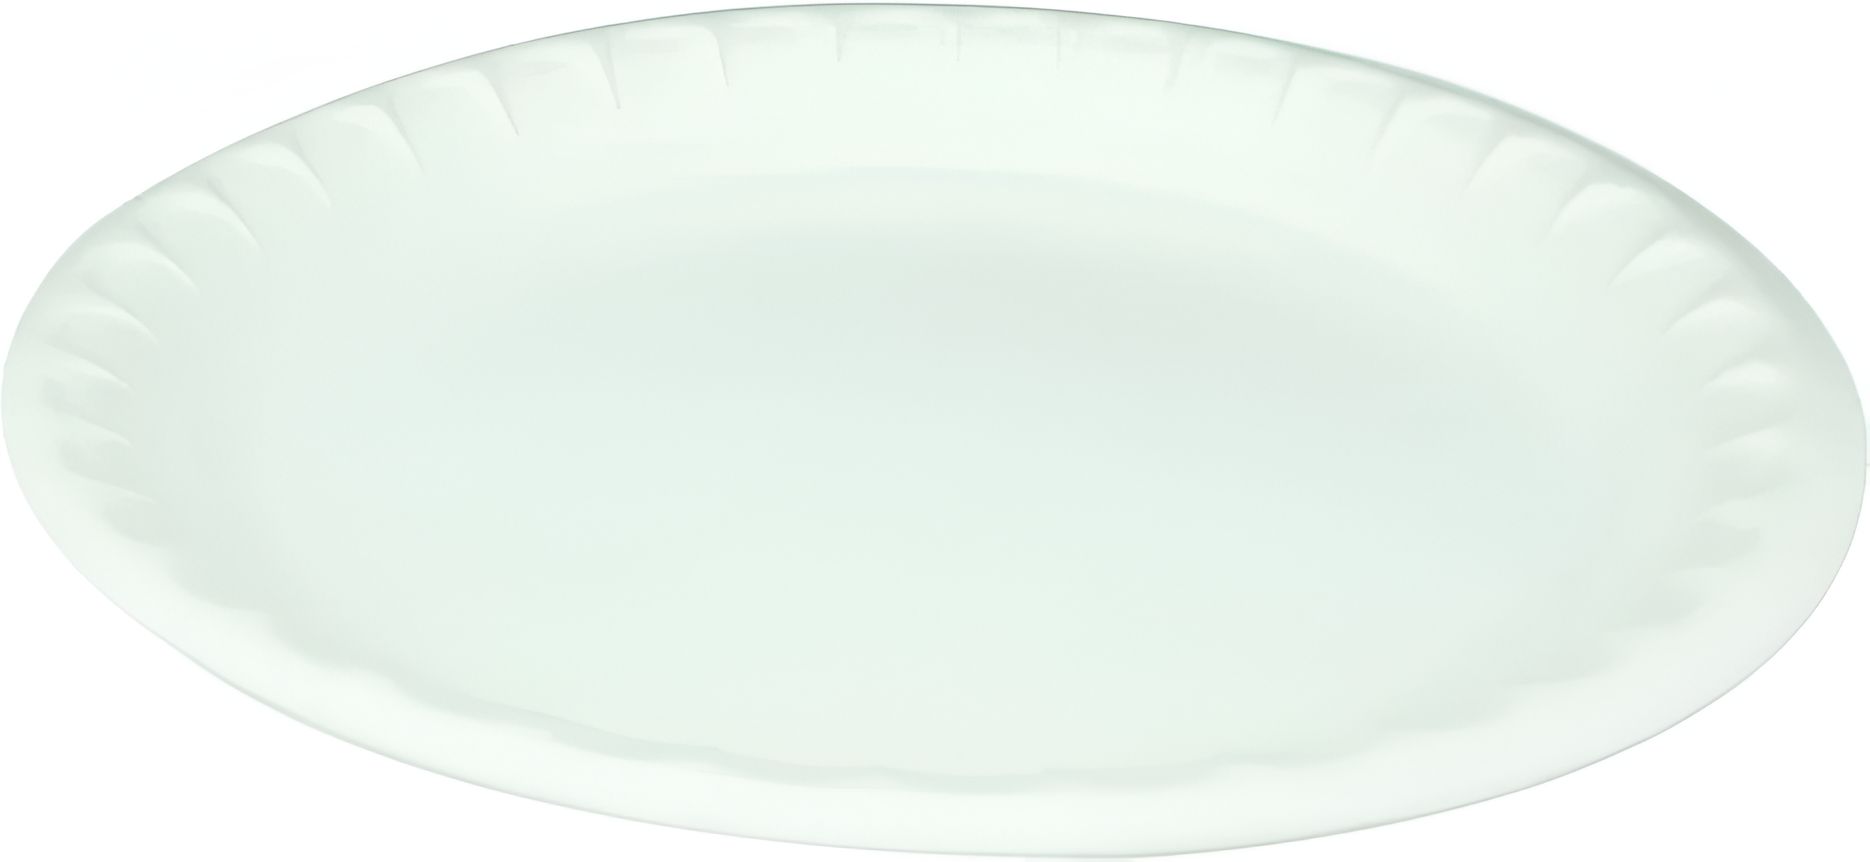 Pactiv Evergreen - 1/4 Round Foam Plate, 4000/Cs - TH10010